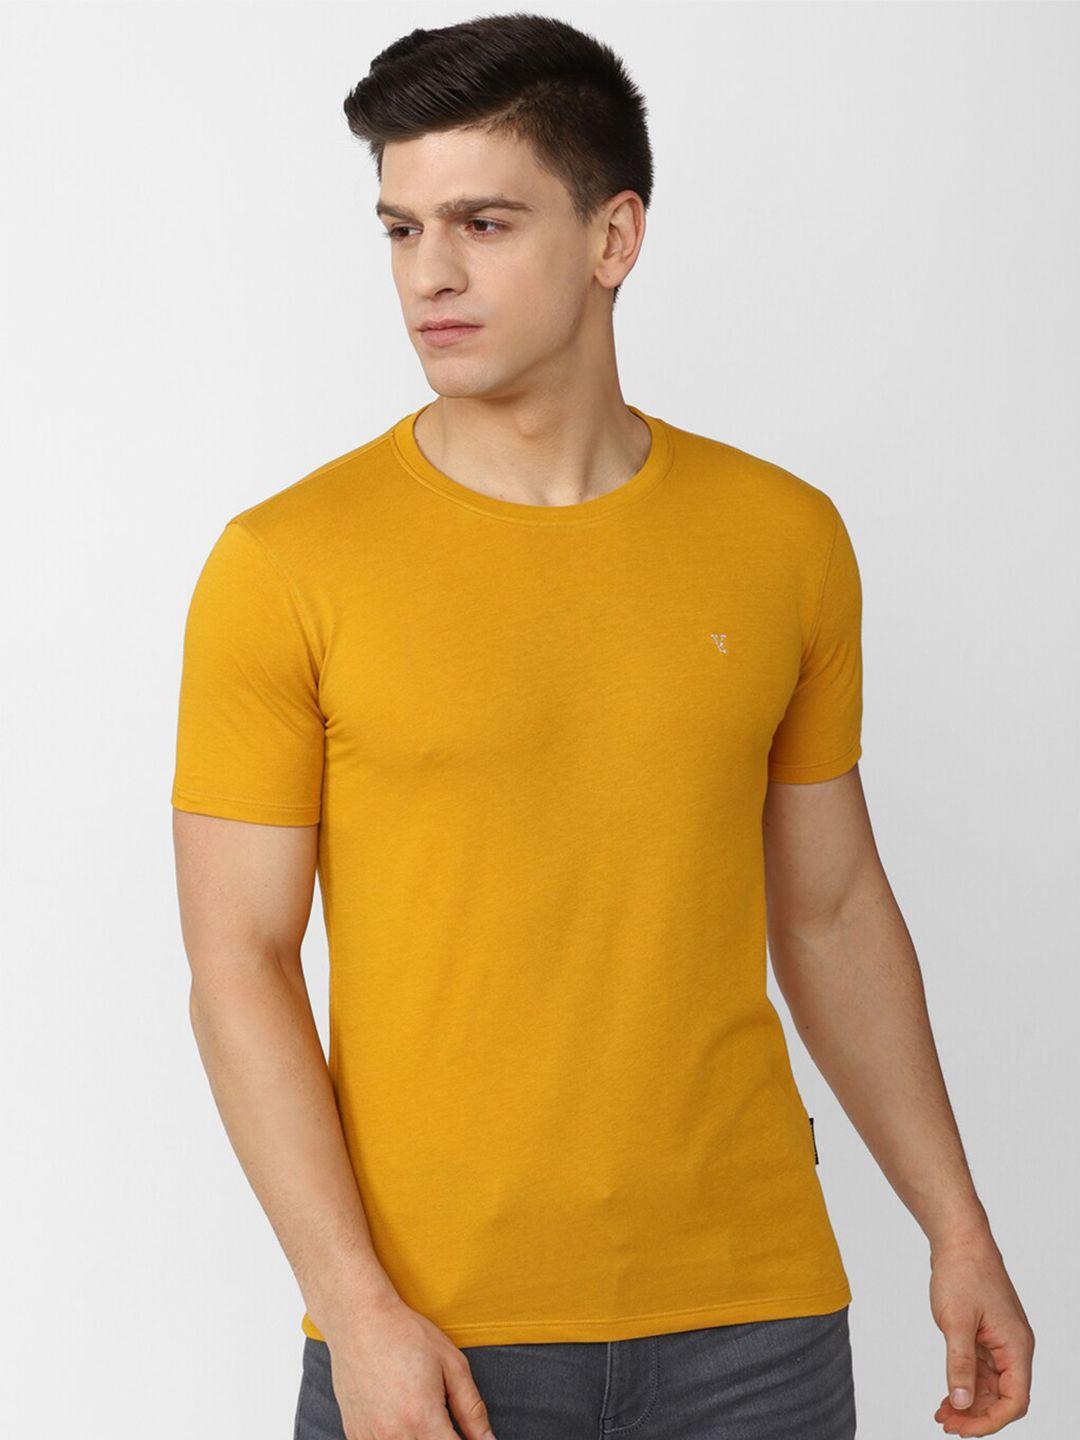 v dot men yellow slim fit t-shirt